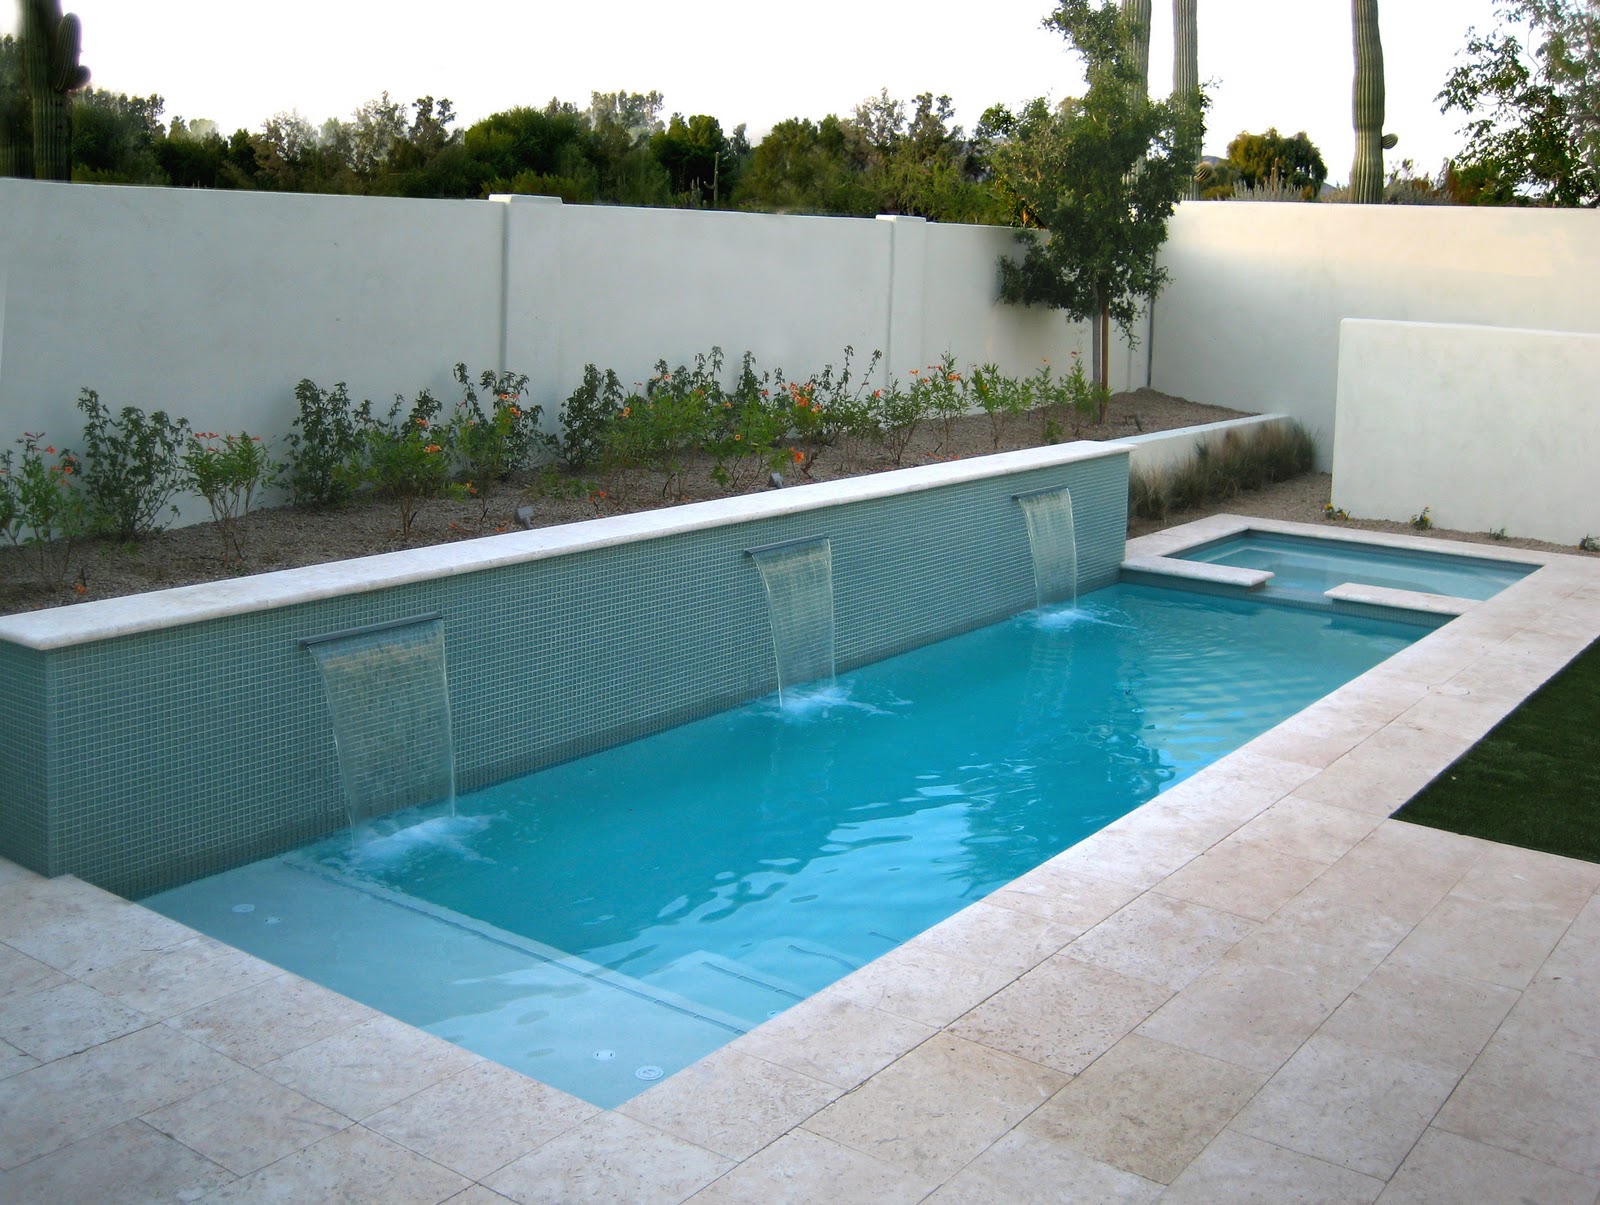 swimming pool designs small yards photo - 4